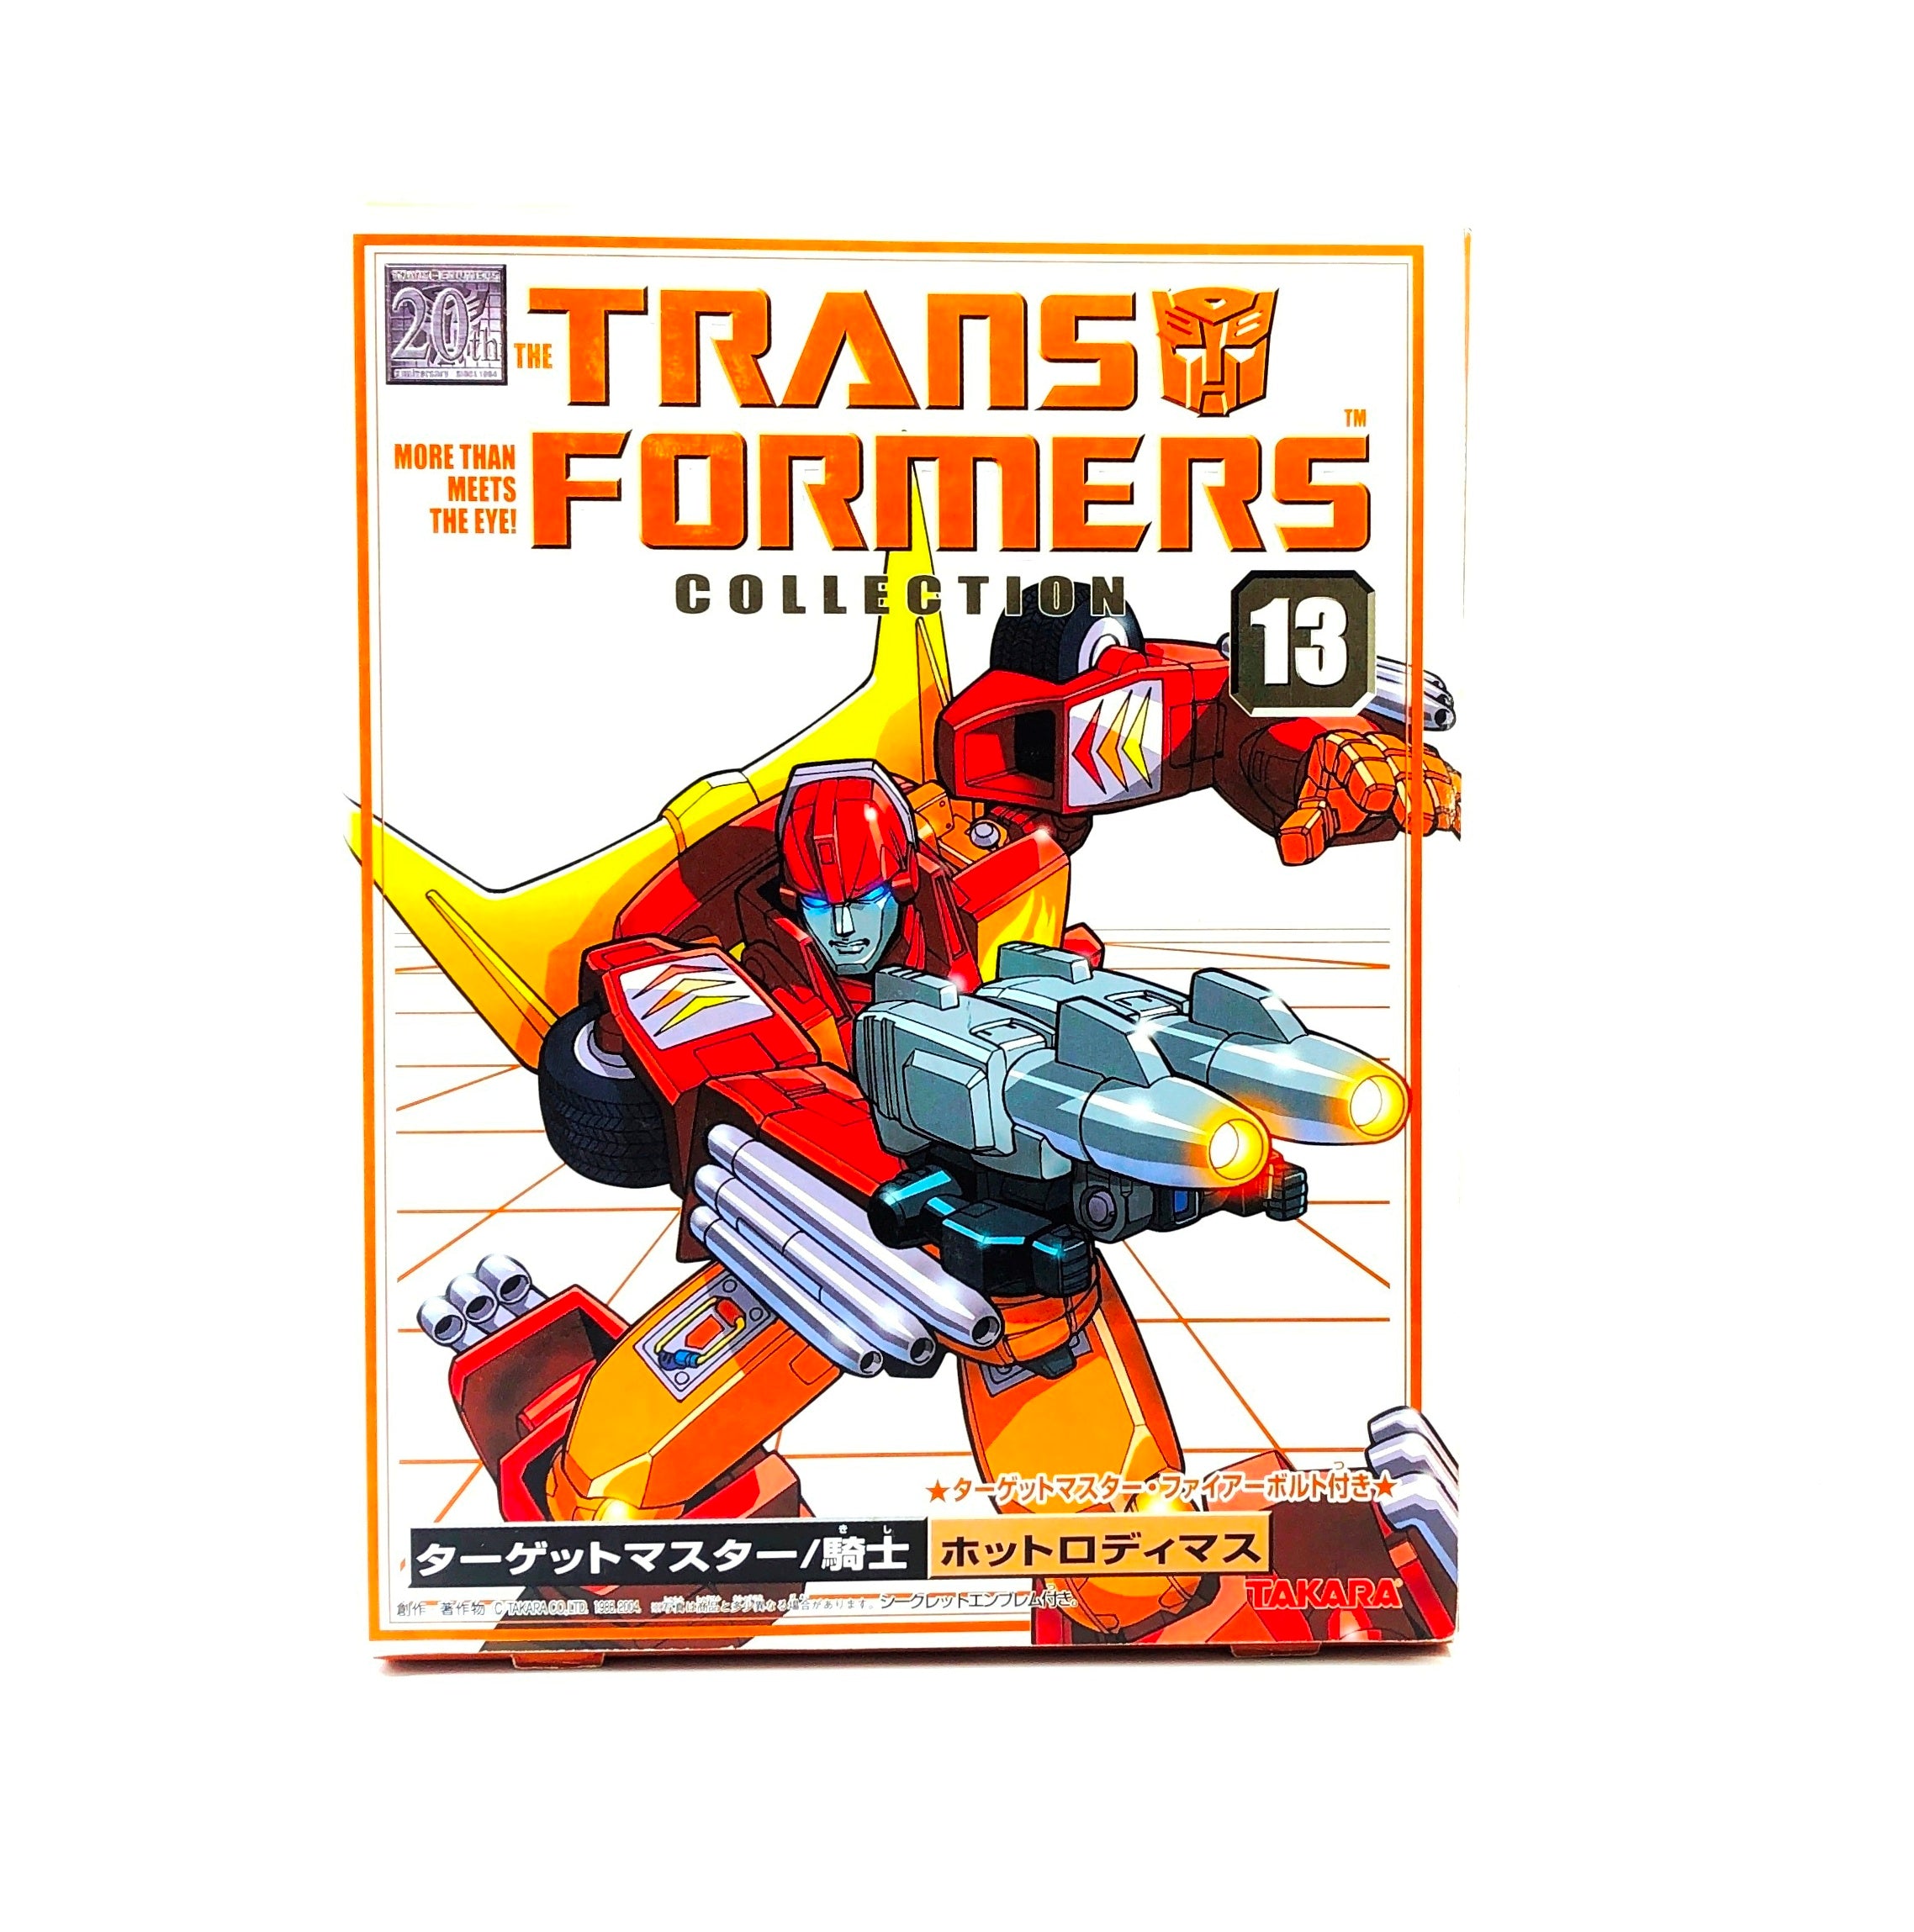 Transformers Collection #13 Hot Rod (Takara, 2004)